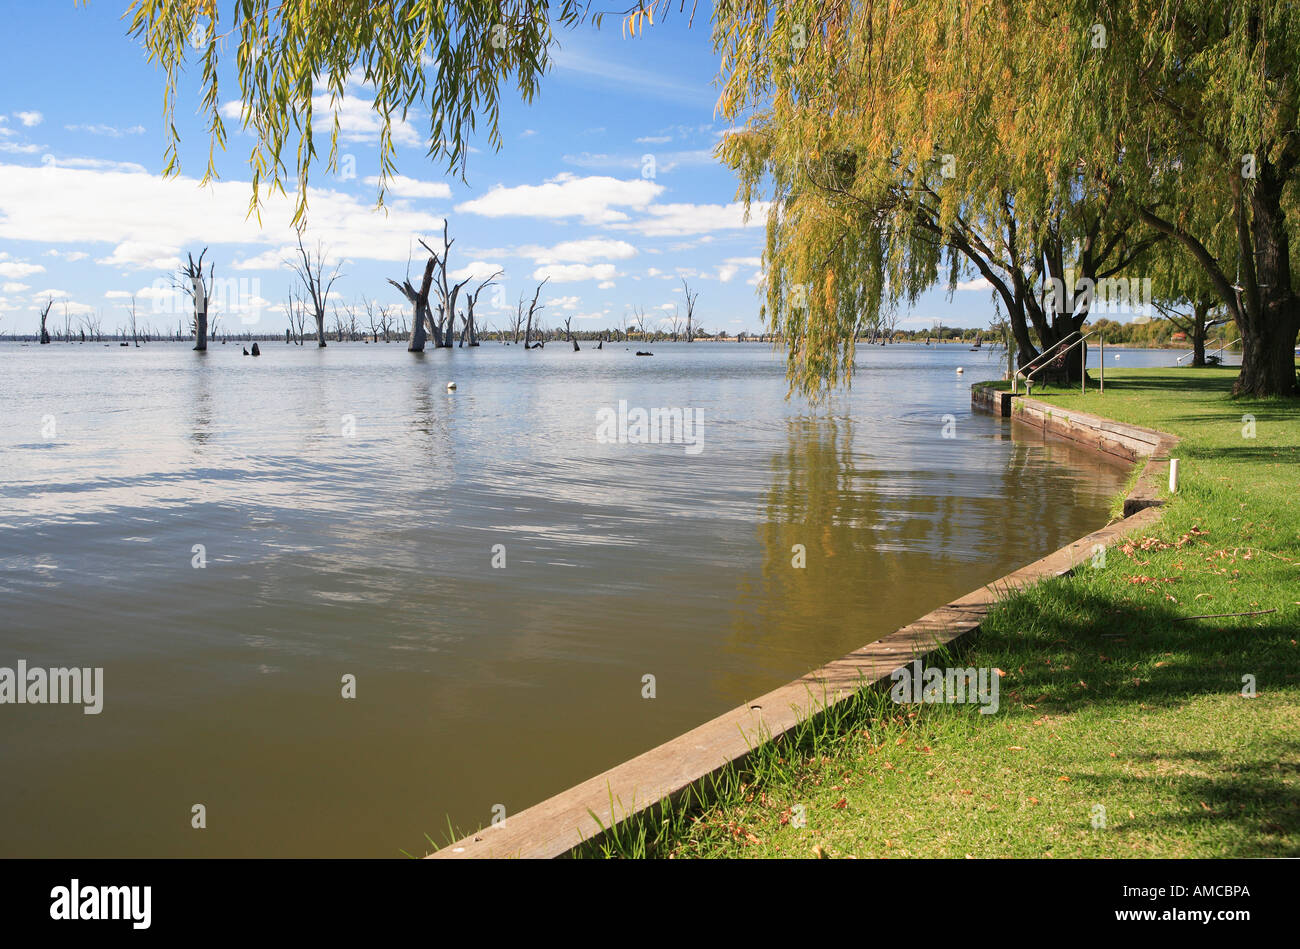 See Mulwala Freizeit Oase in der Nähe von Partnerstädten Grenze Mulwala NSW Yarrawonga Victoria Australien Stockfoto